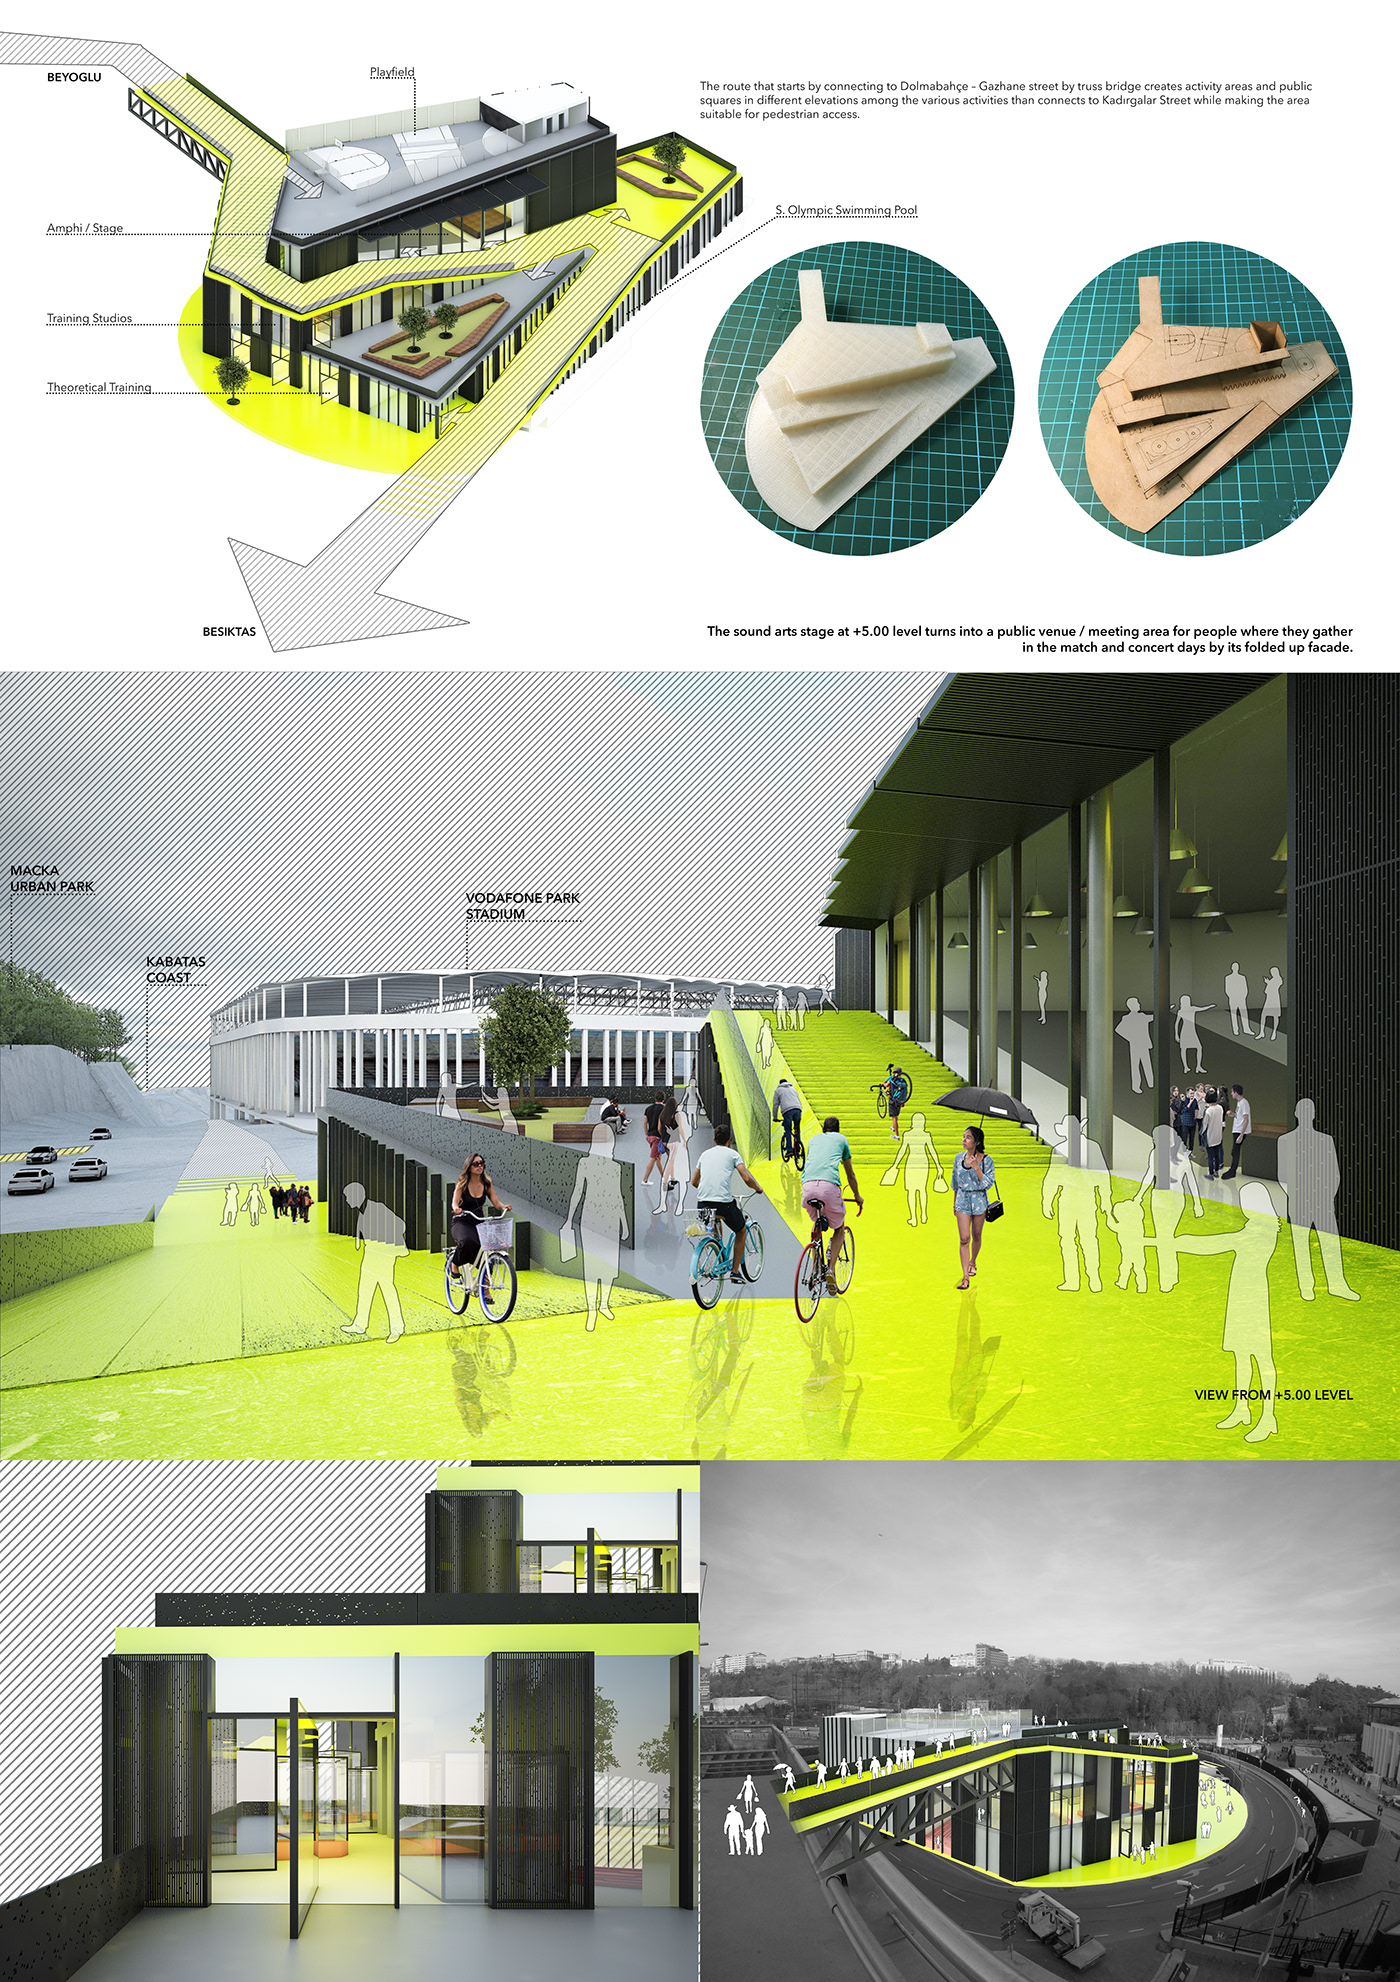 architectural architect Project visualization architectural design Architectural Portfolio